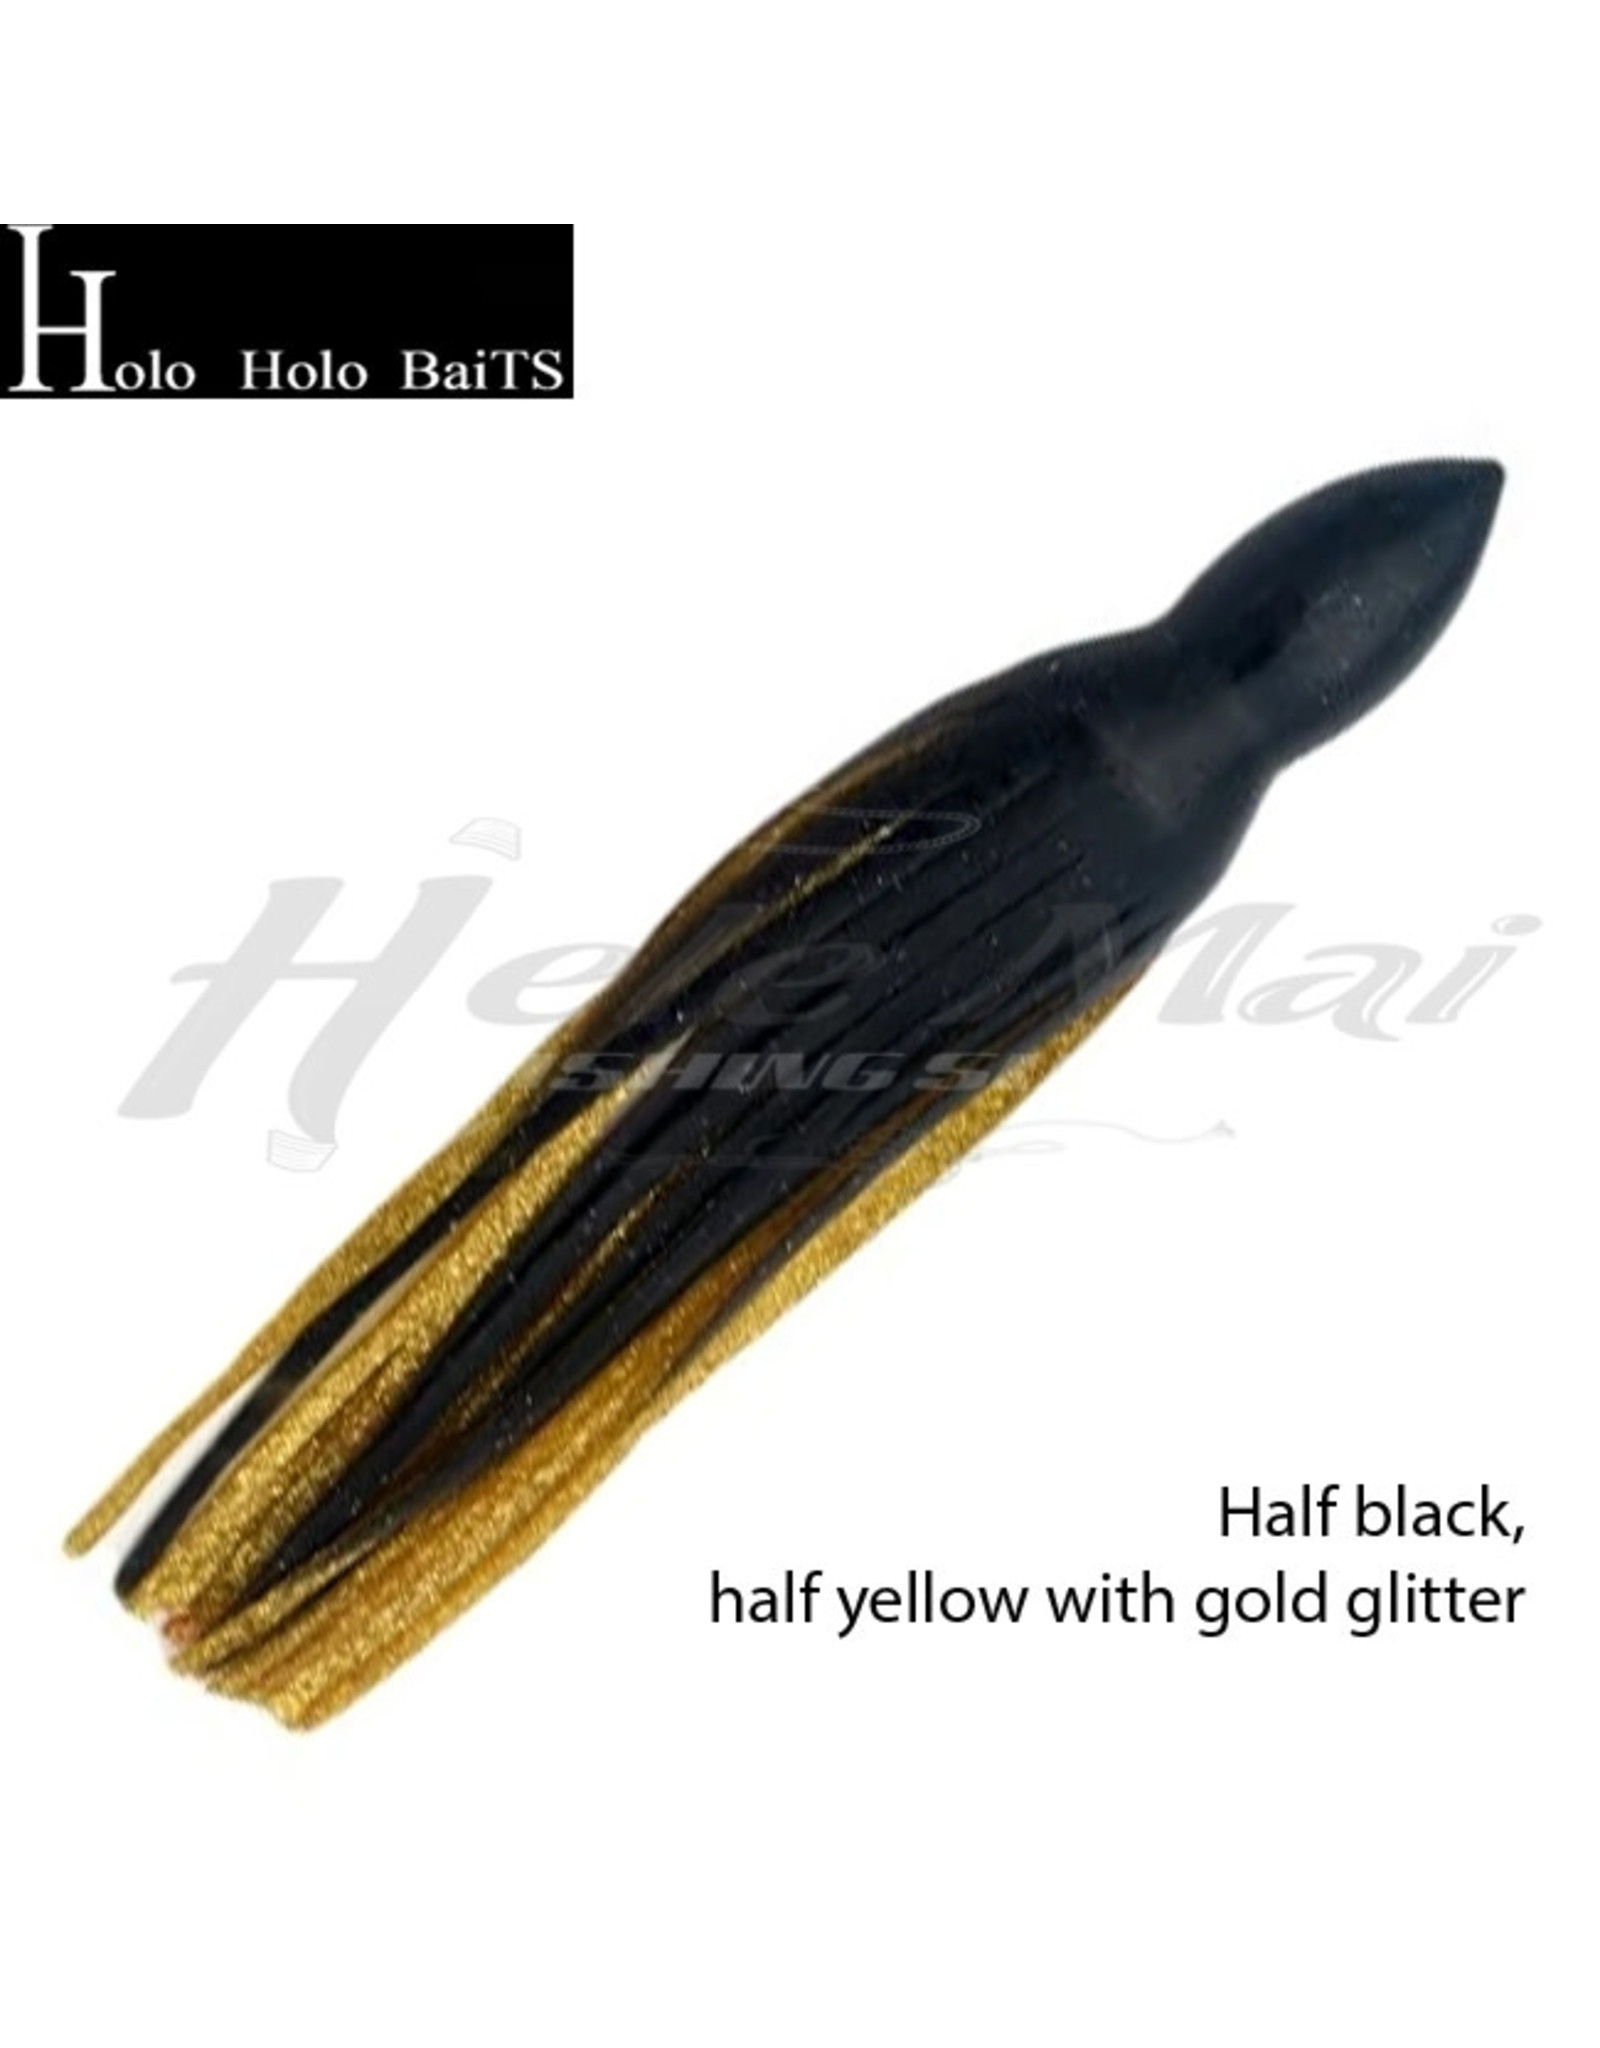 HOLO HOLO HAWAII (HHH) HHH, 7" SQUID SKIRT BLACK GOLD GLITTER #006